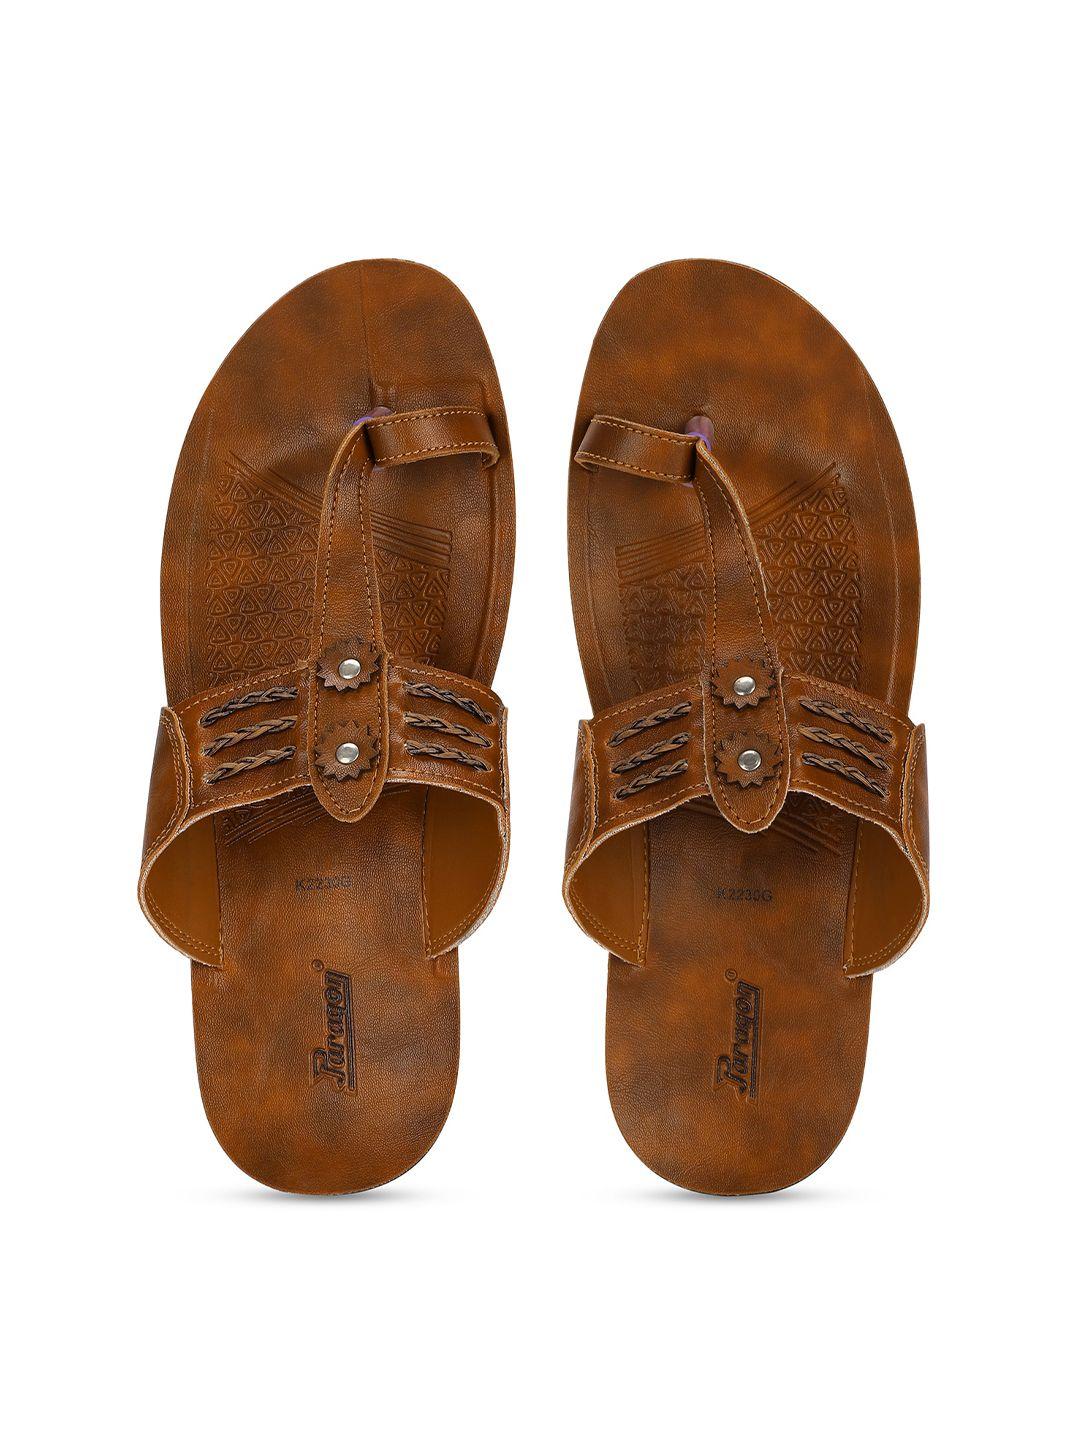 paragon men anti-skid sole & sturdy construction ethnic comfort sandals